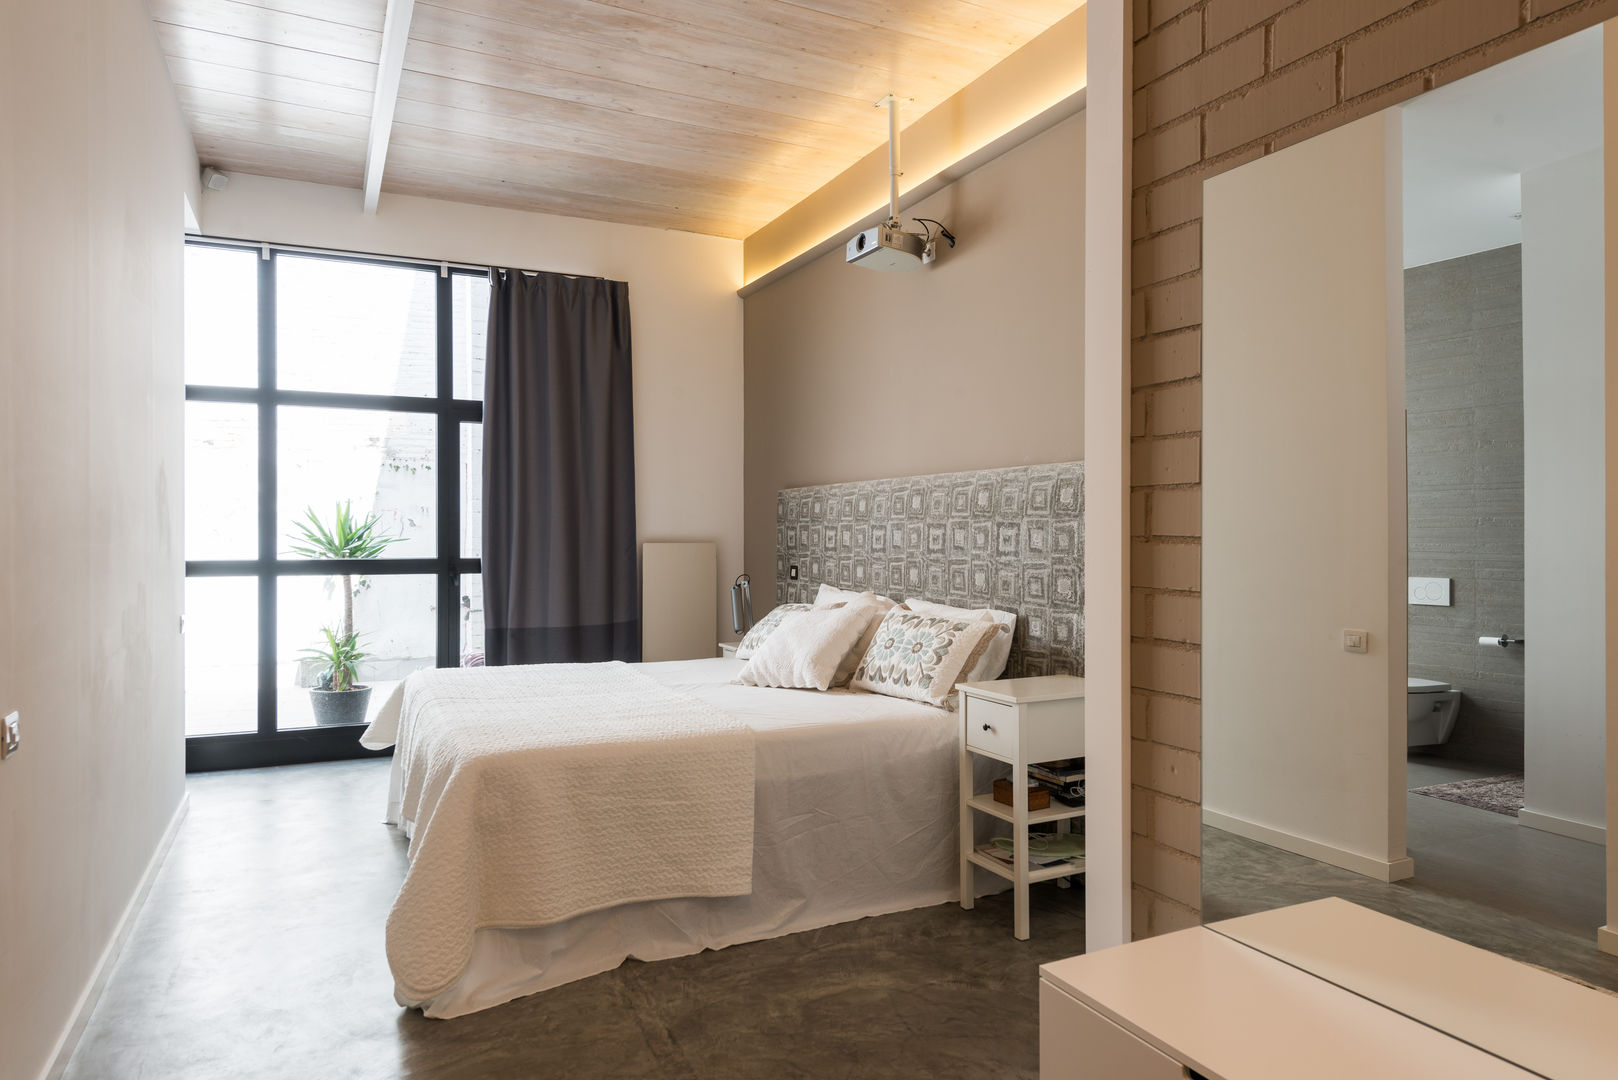 Dormitorio | Reforma Loft Barcelona | Standal homify Dormitorios modernos